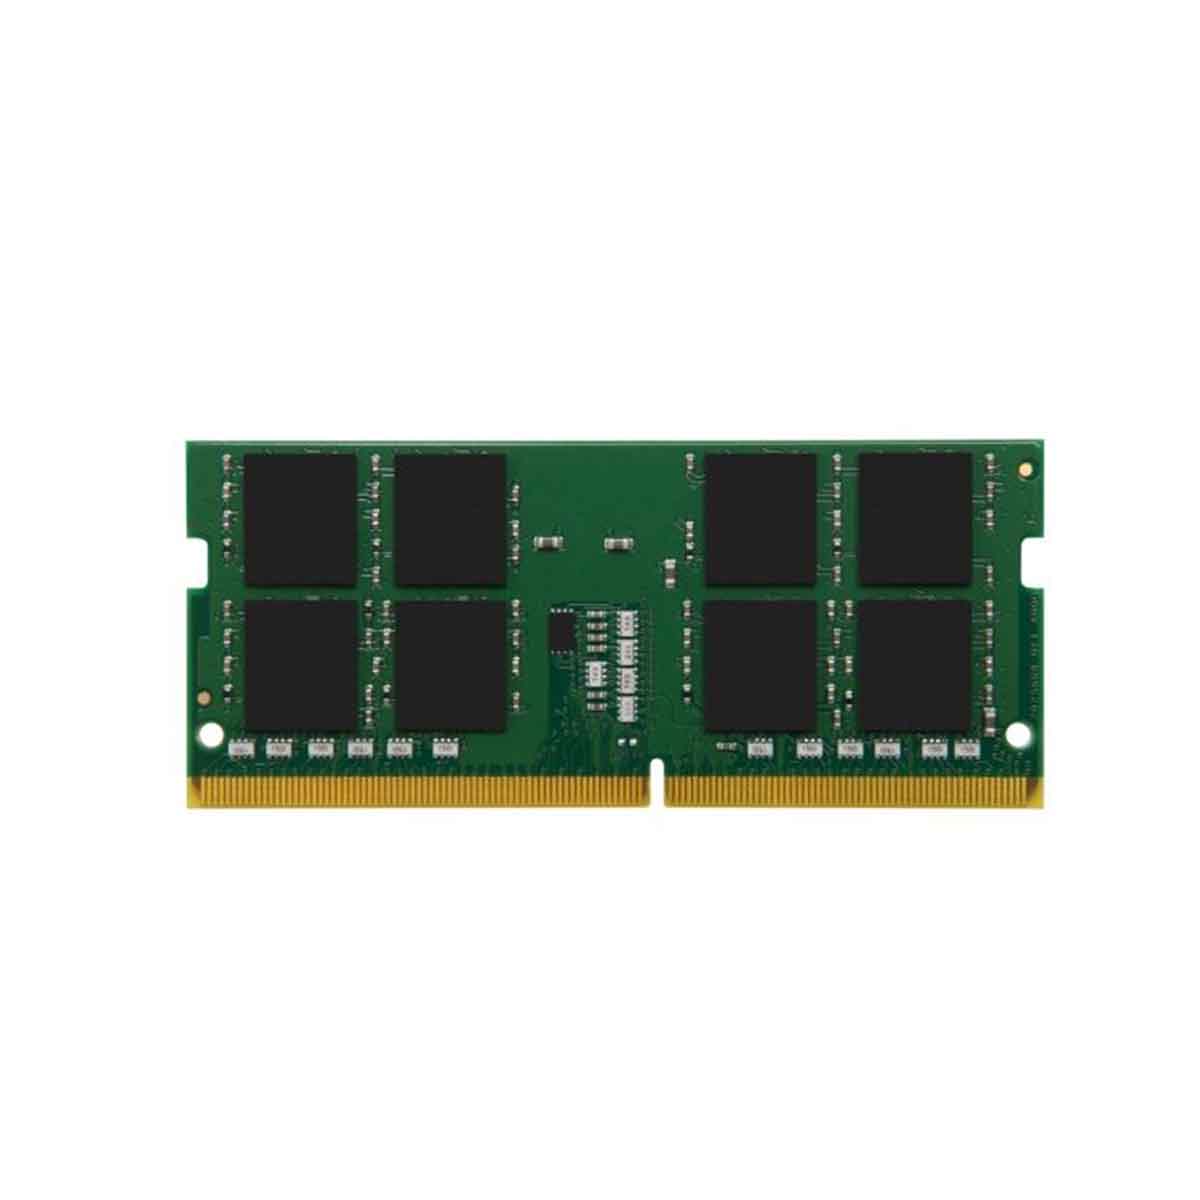 Memoria Kingston 4GB DDR4 2400 Mhz para PC KVR24N17S6/4